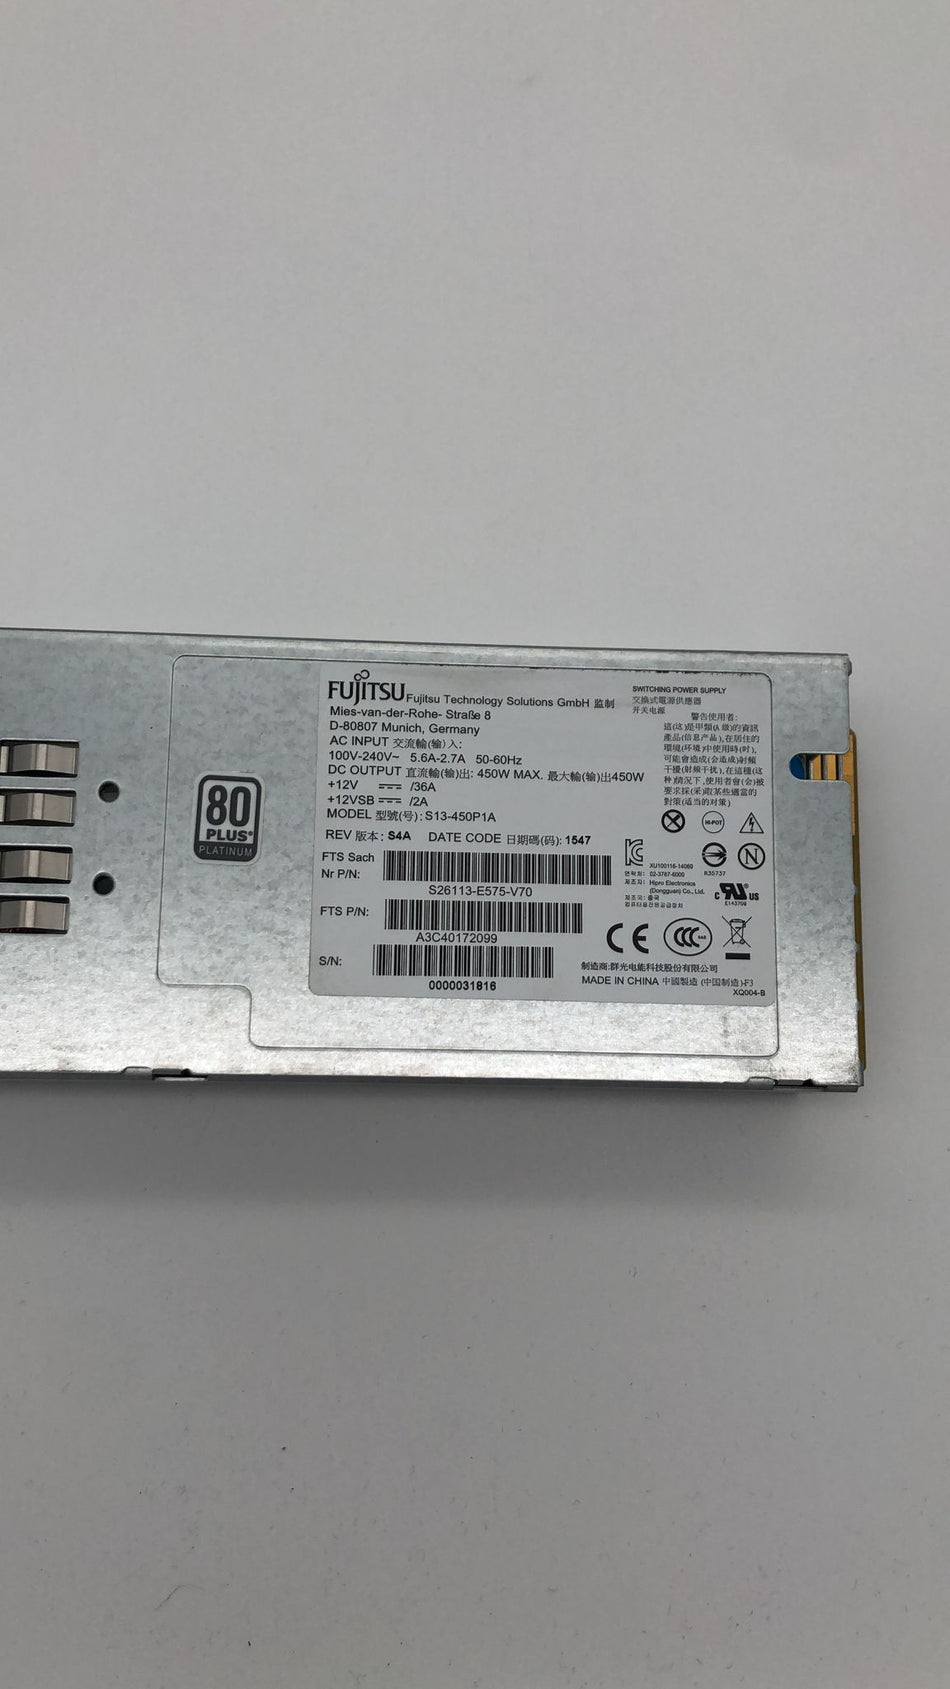 Fujitsu S13-450P1A - 450 Watt Server Netzteil - Primergy RX2540